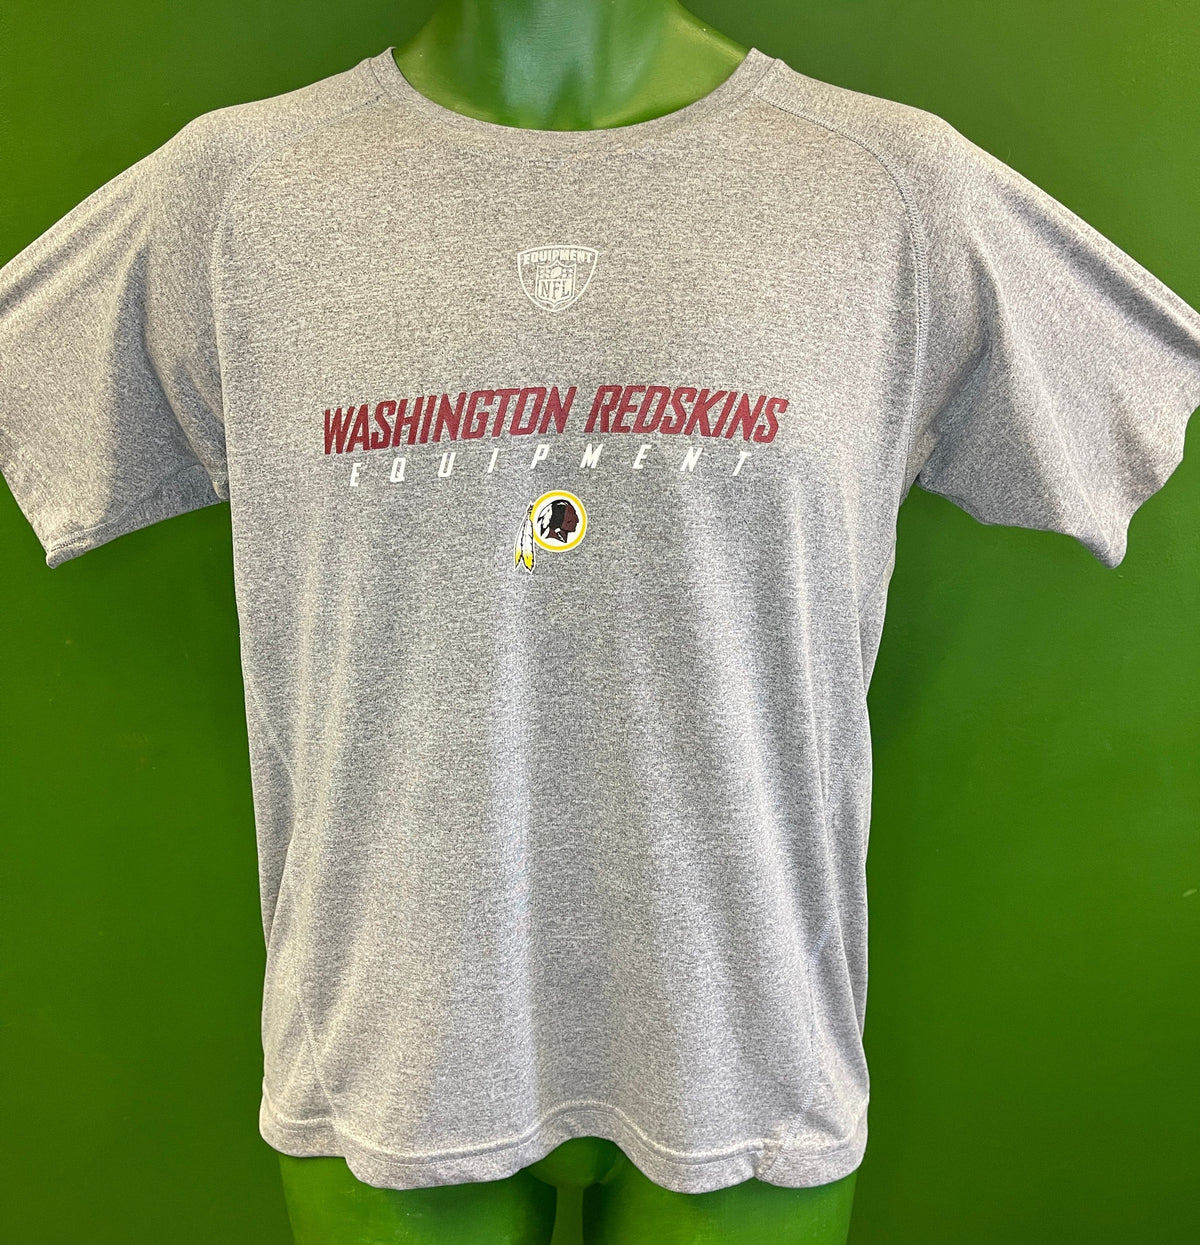 NFL Washington Commanders (Redskins) On Field T-Shirt Youth Large 14-16